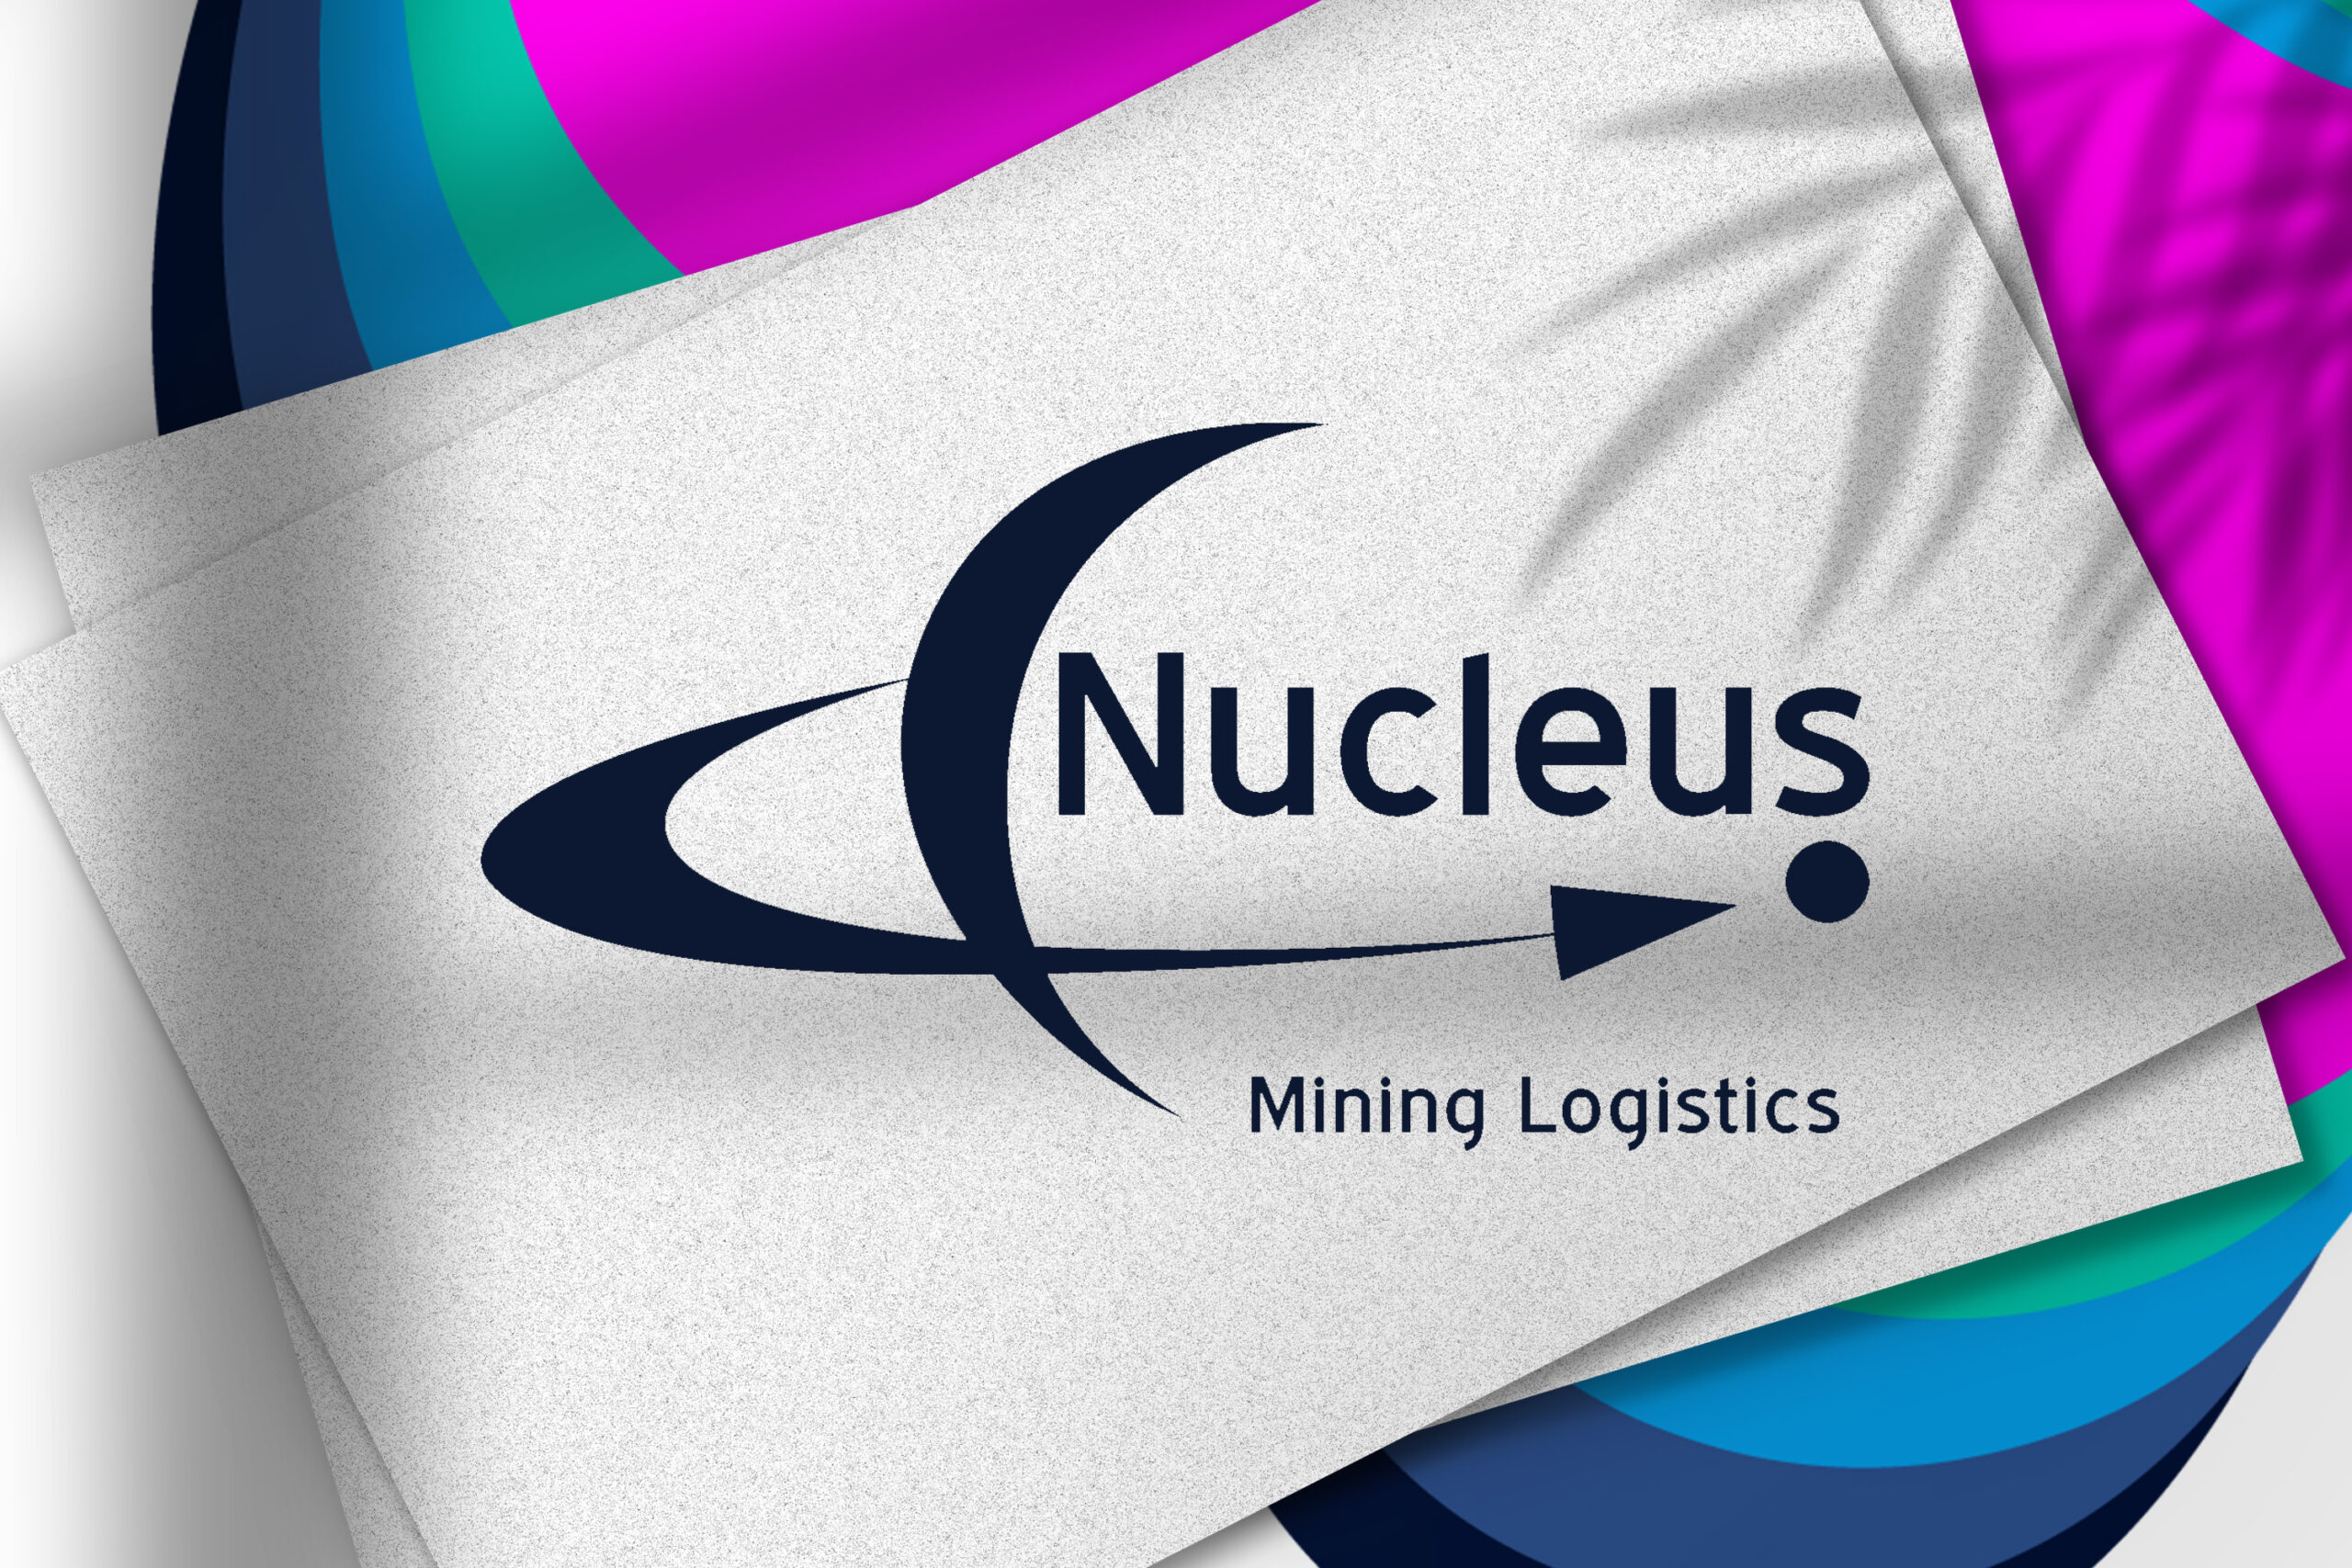 Nucleus company logo